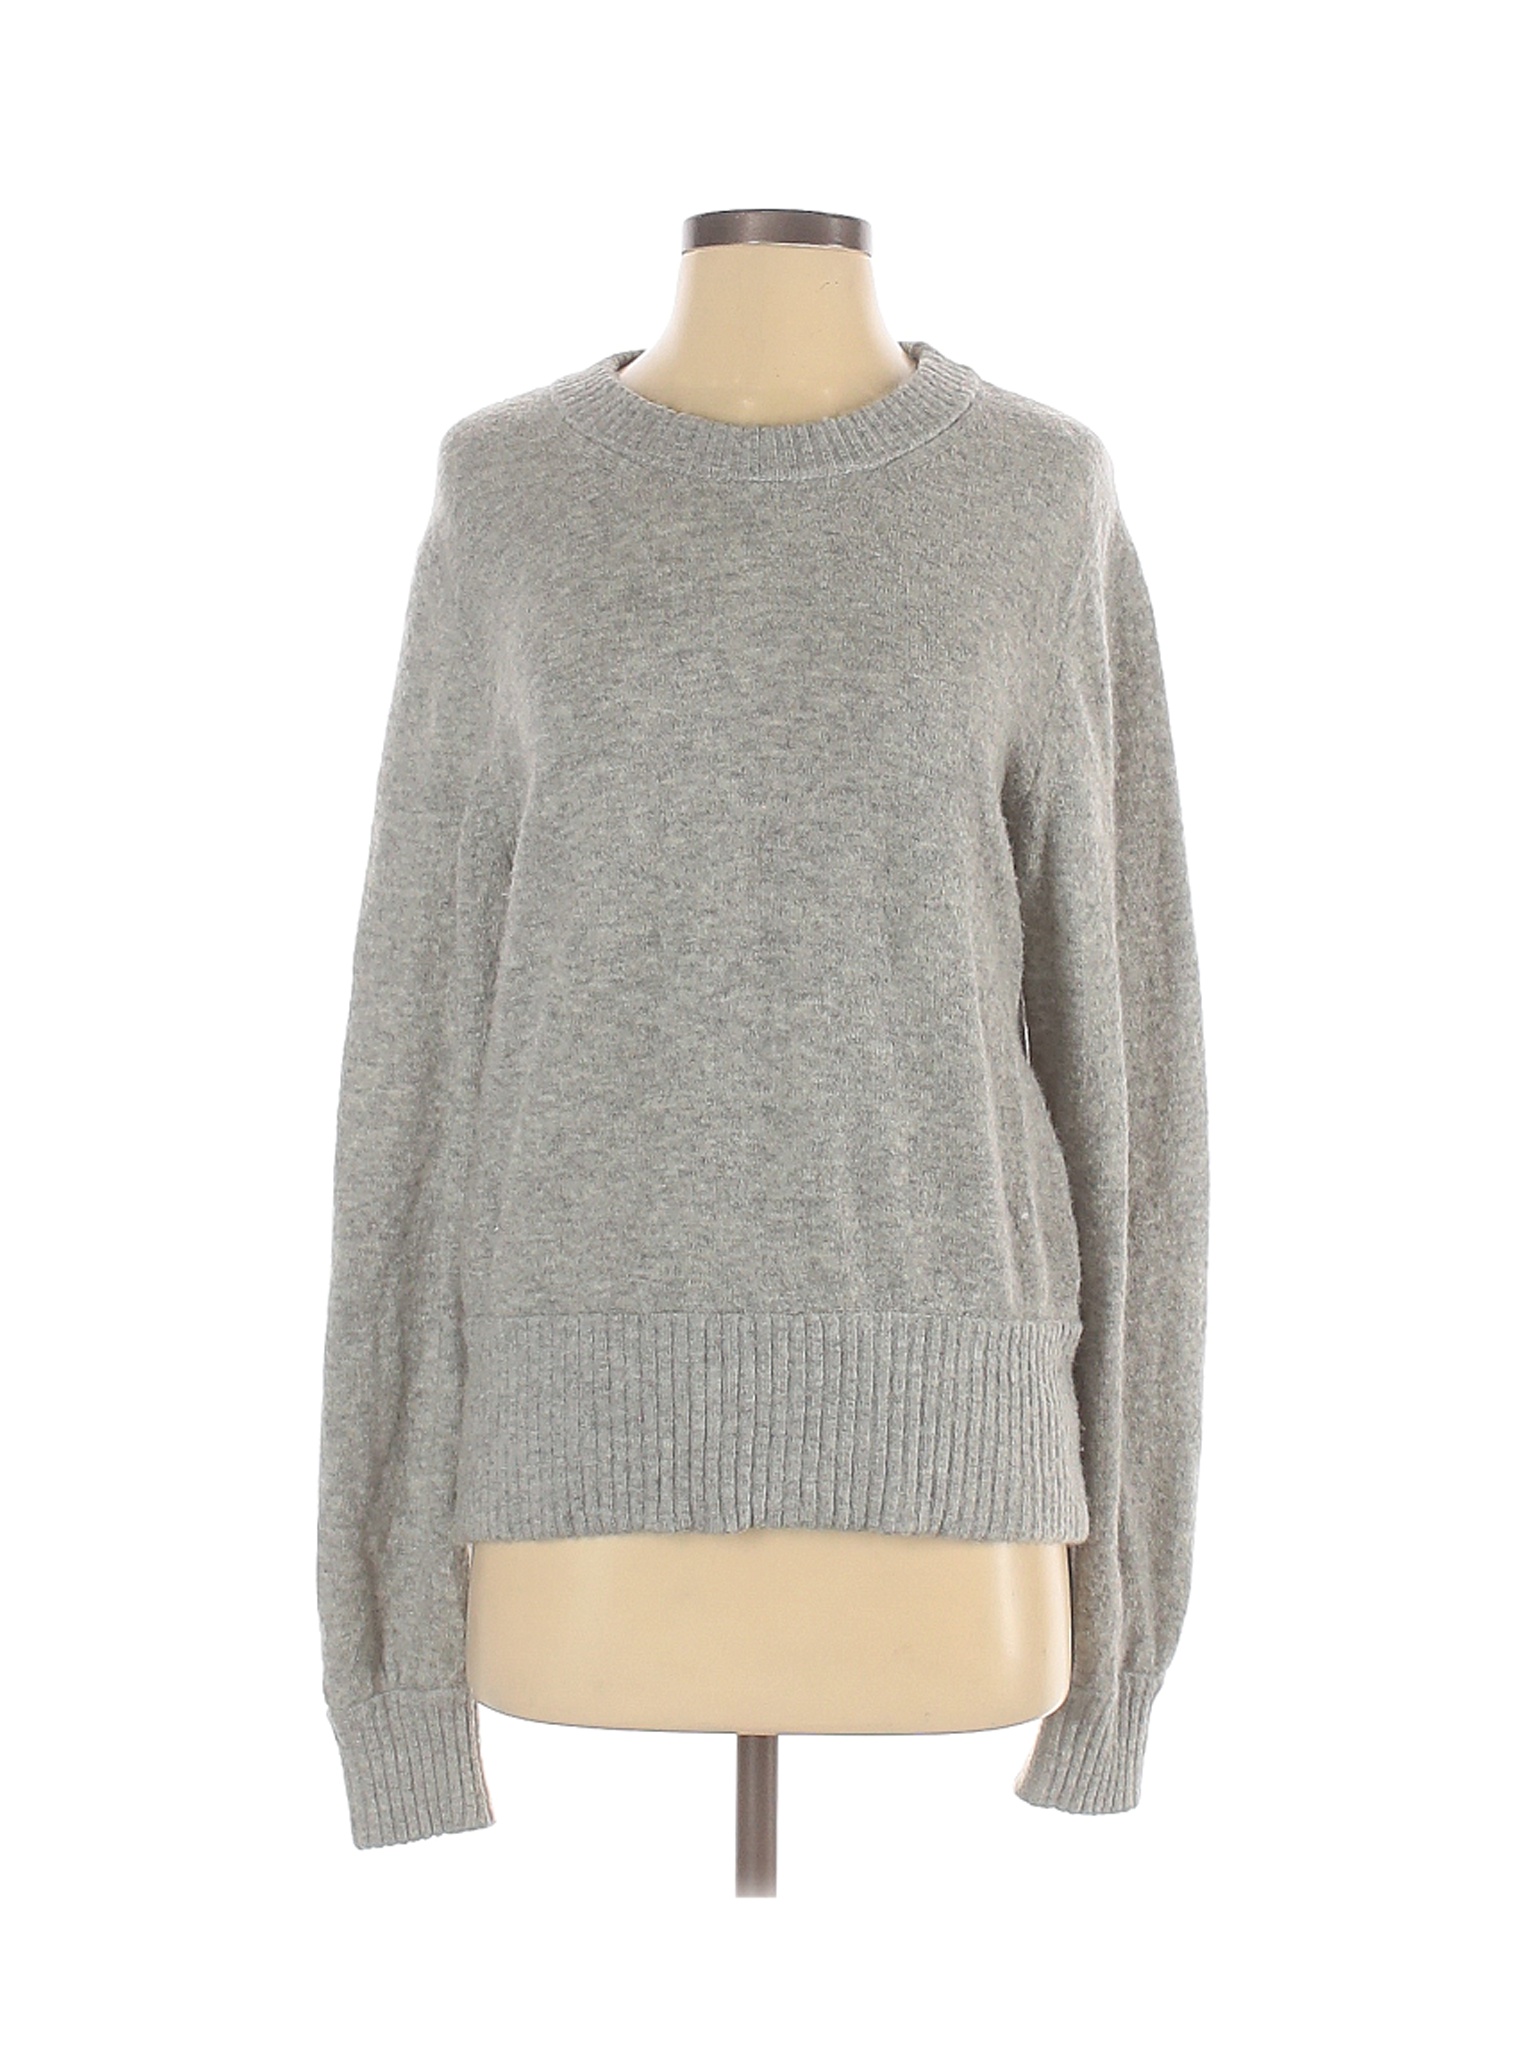 J.Crew Women Gray Pullover Sweater M | eBay